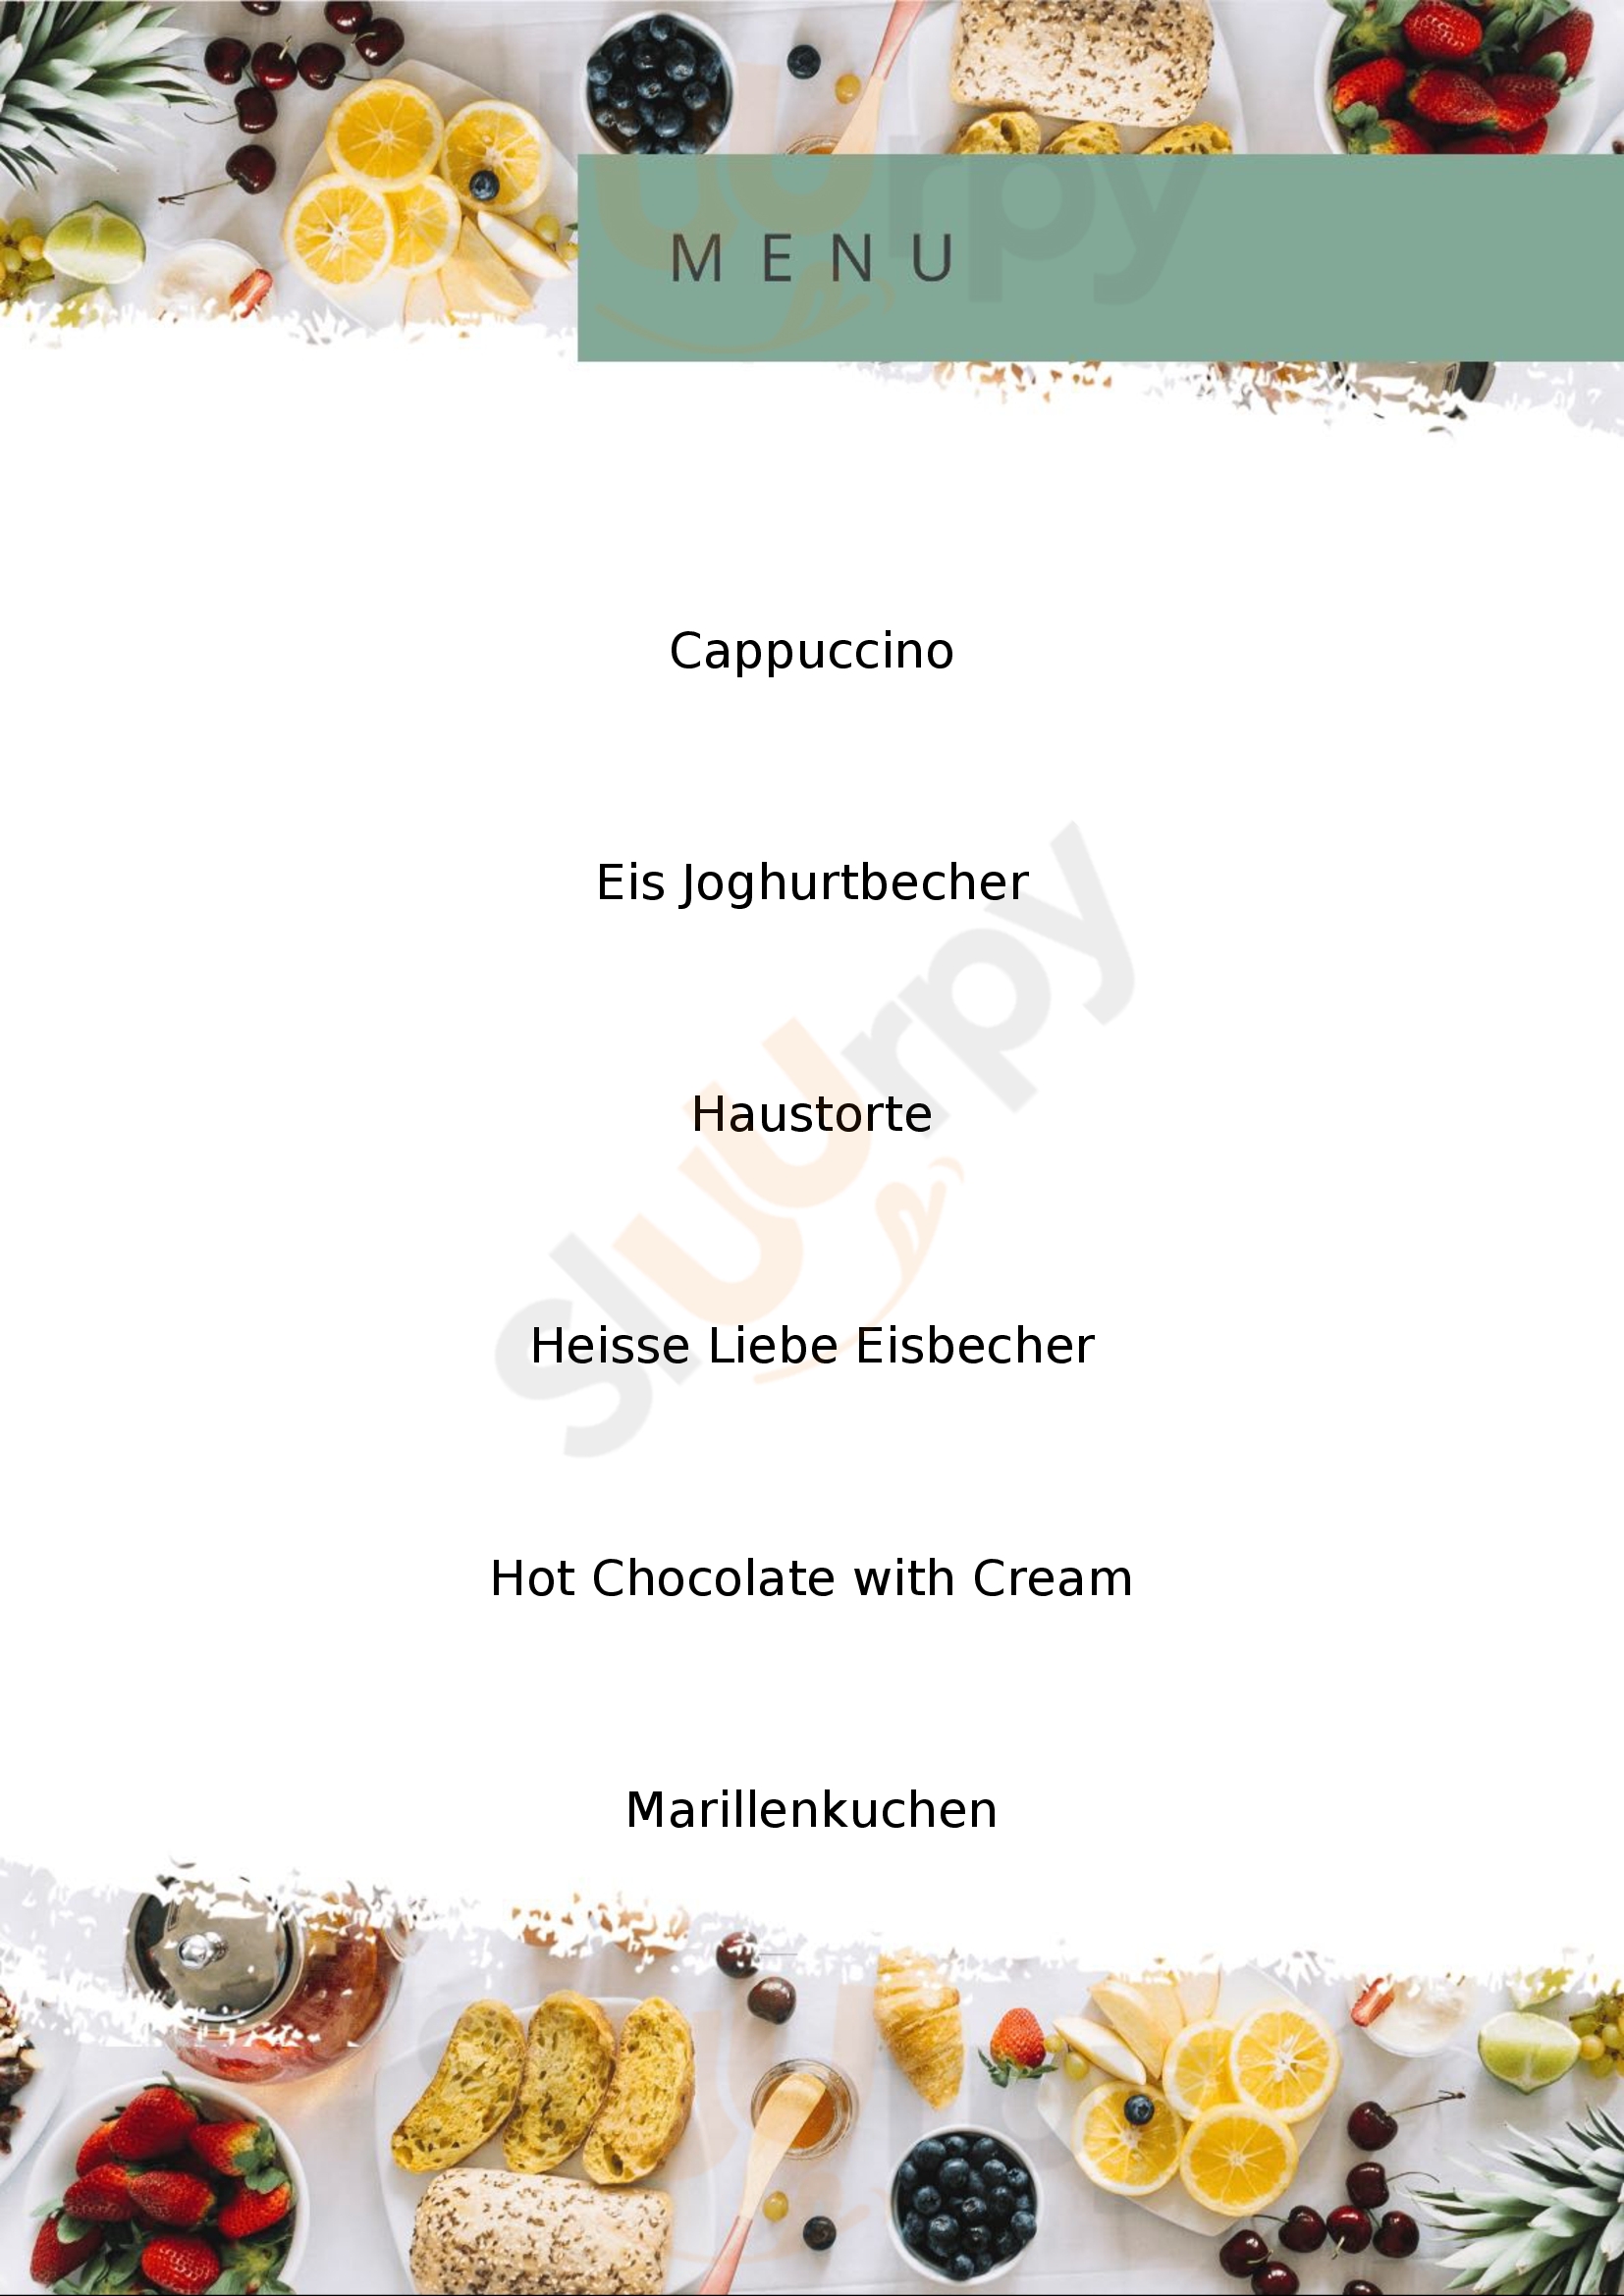 Bäckerei Konditorei Mistlbacher Melk Menu - 1